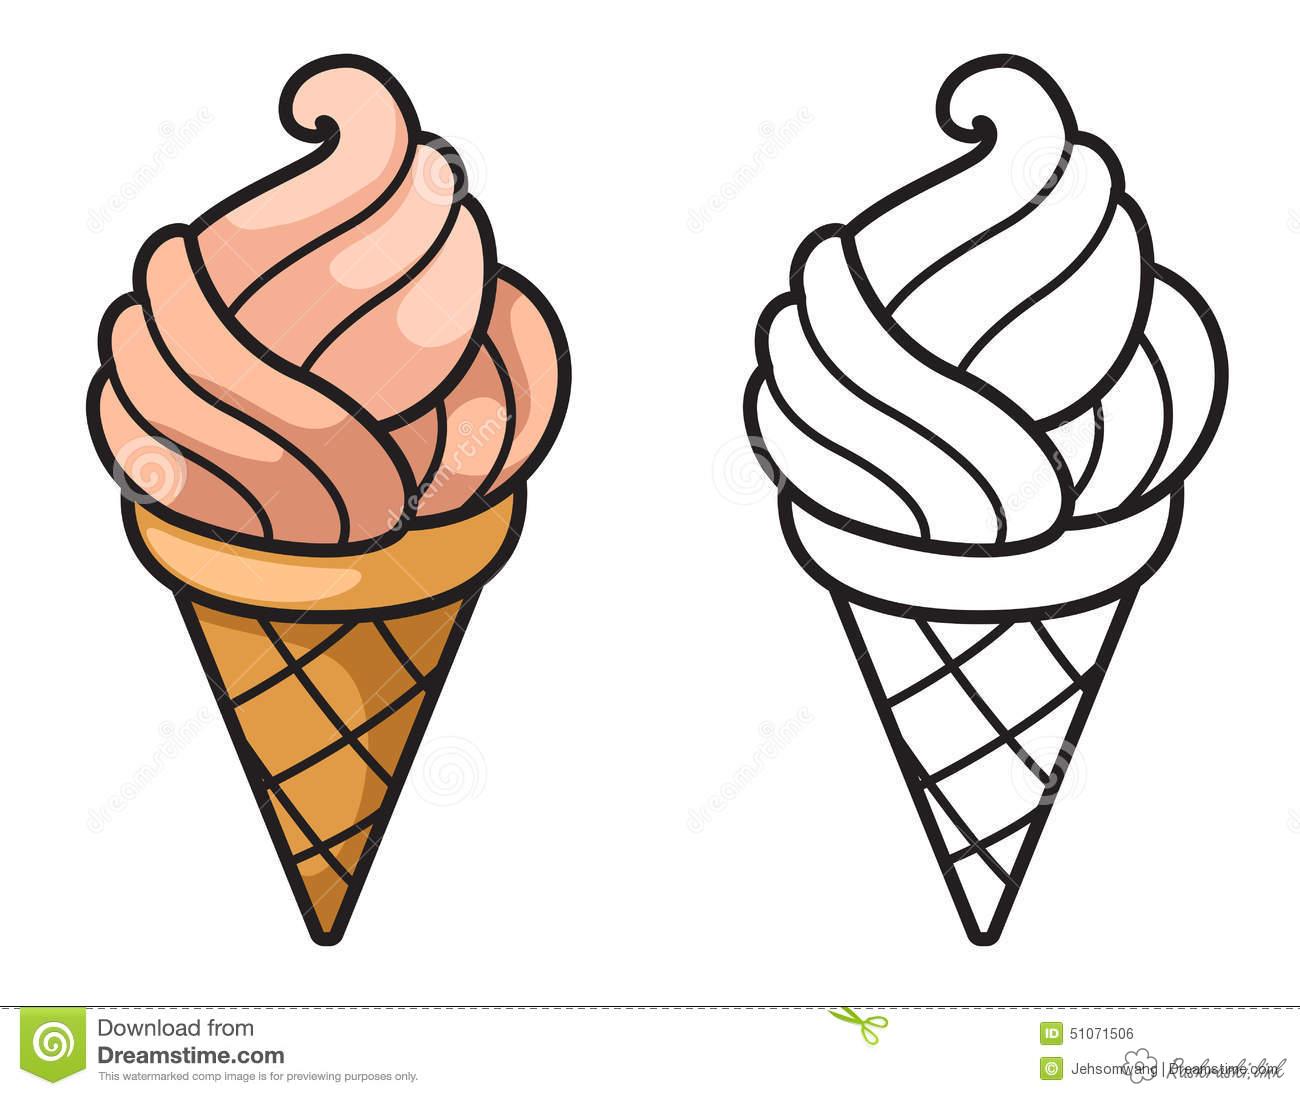 Розмальовки морозивом Розмальовки, гра для дітей, полуничне, морозиво, вафельний стаканчик